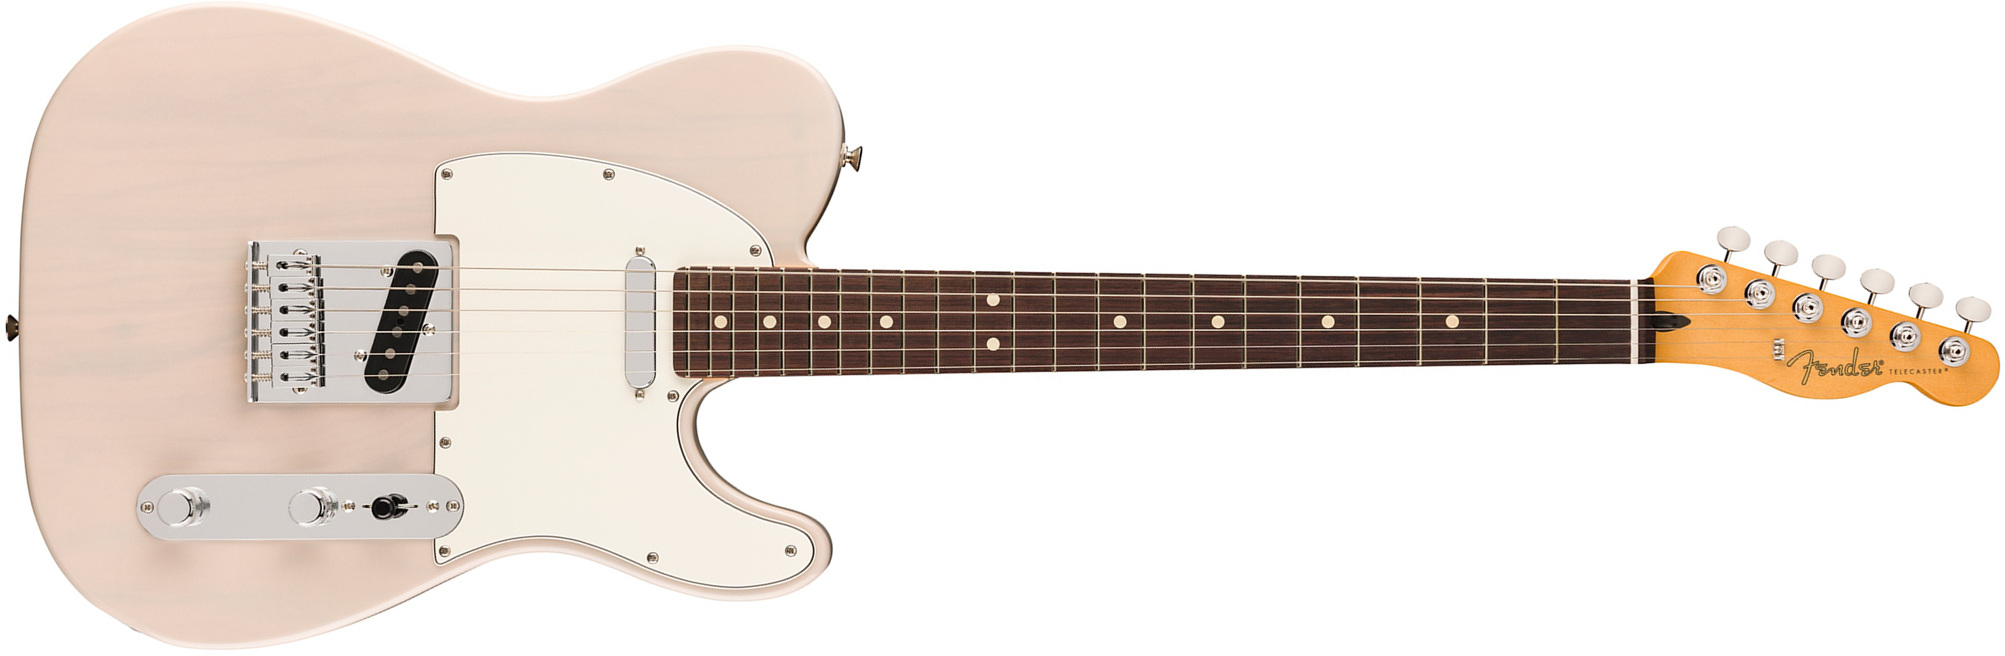 Fender Tele Player Ii Mex Frene 2s Ht Rw - White Blonde - Televorm elektrische gitaar - Main picture